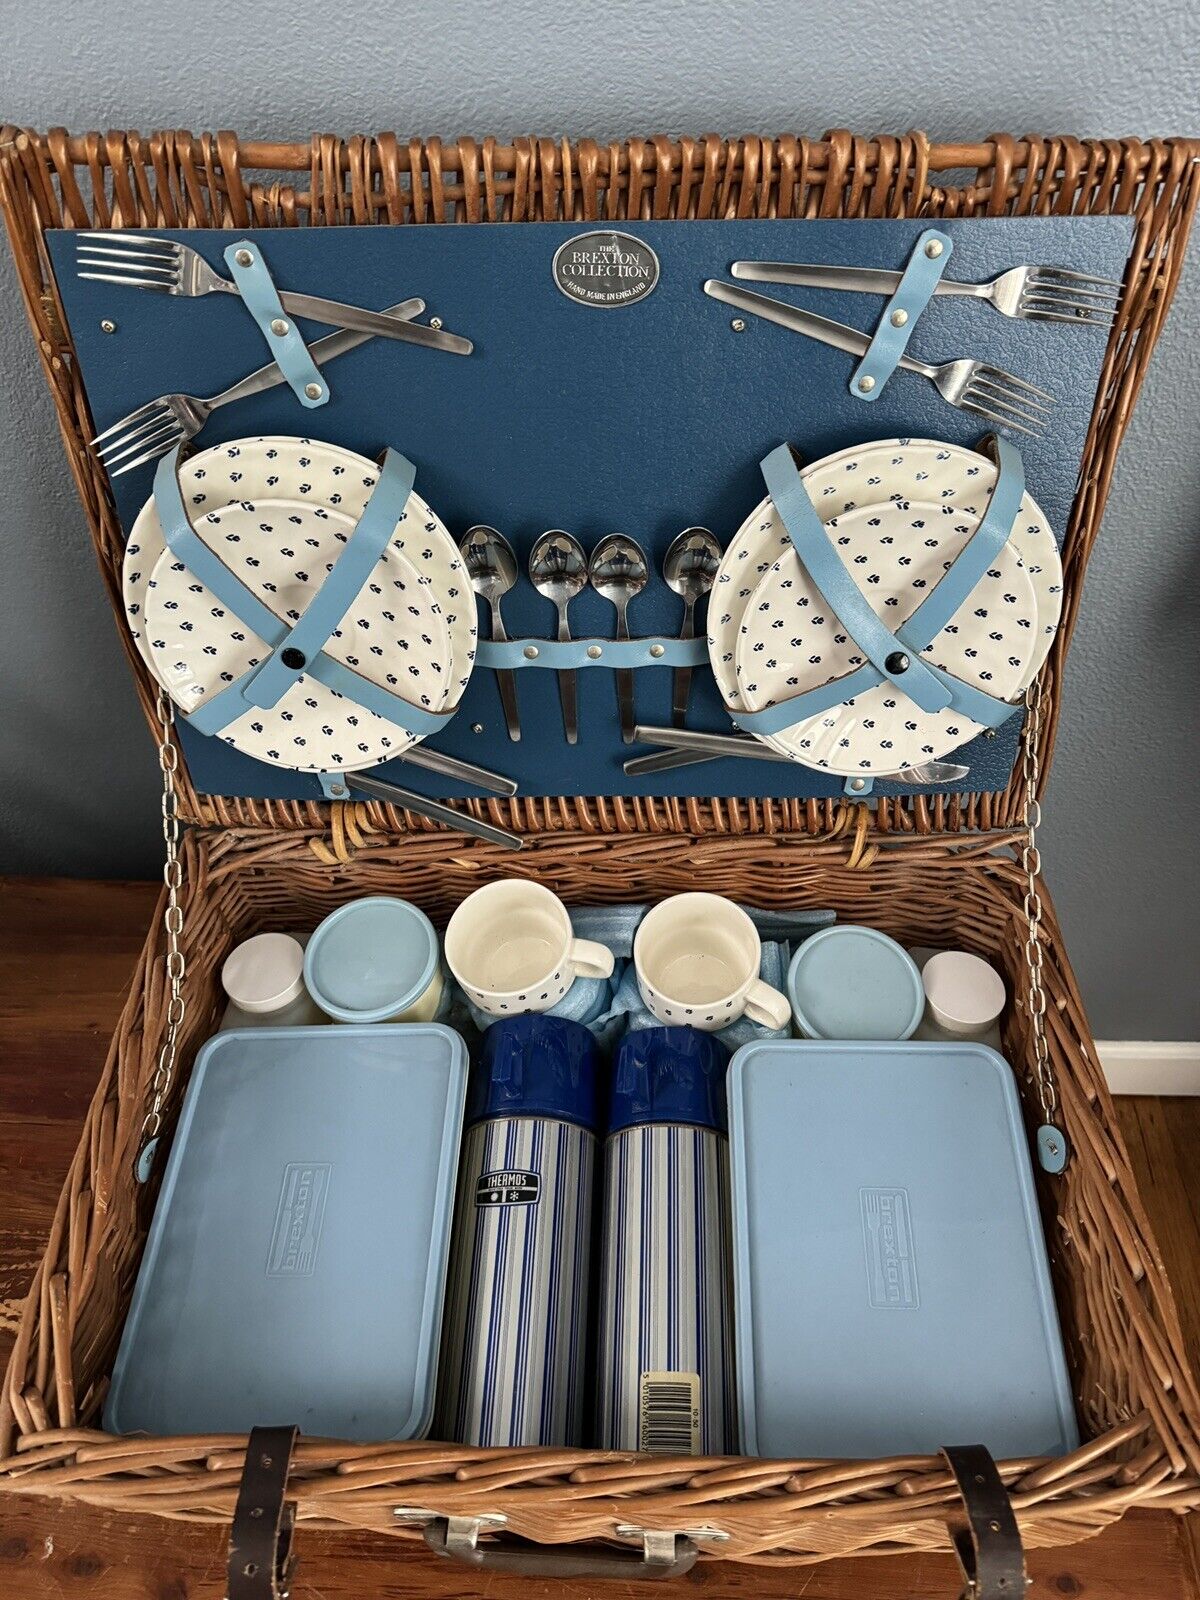 1950s Vintage Brexton Wicker Picnic Basket / Tea Set for 4 - Original & Complete